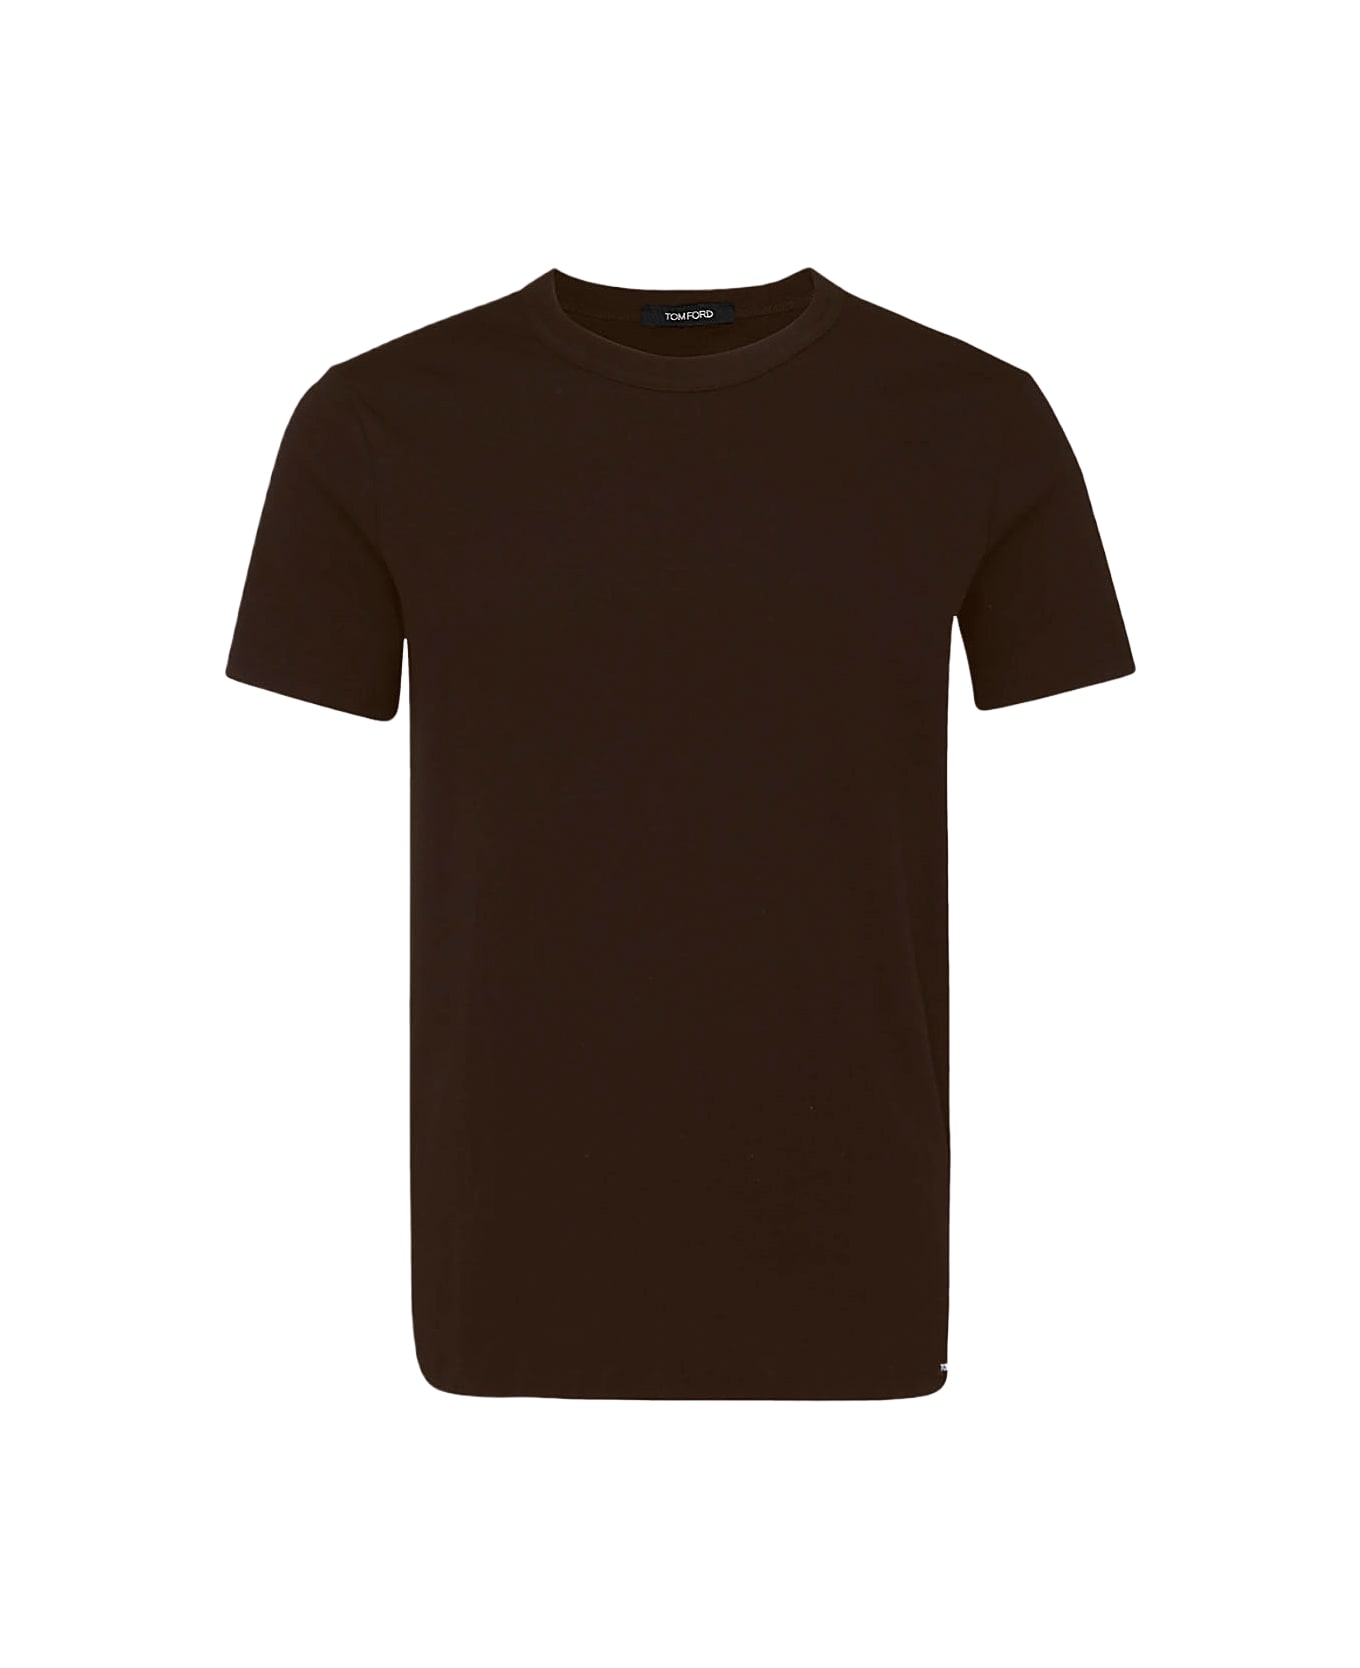 Tom Ford Ebony Cotton Blend T-shirt - Ebony